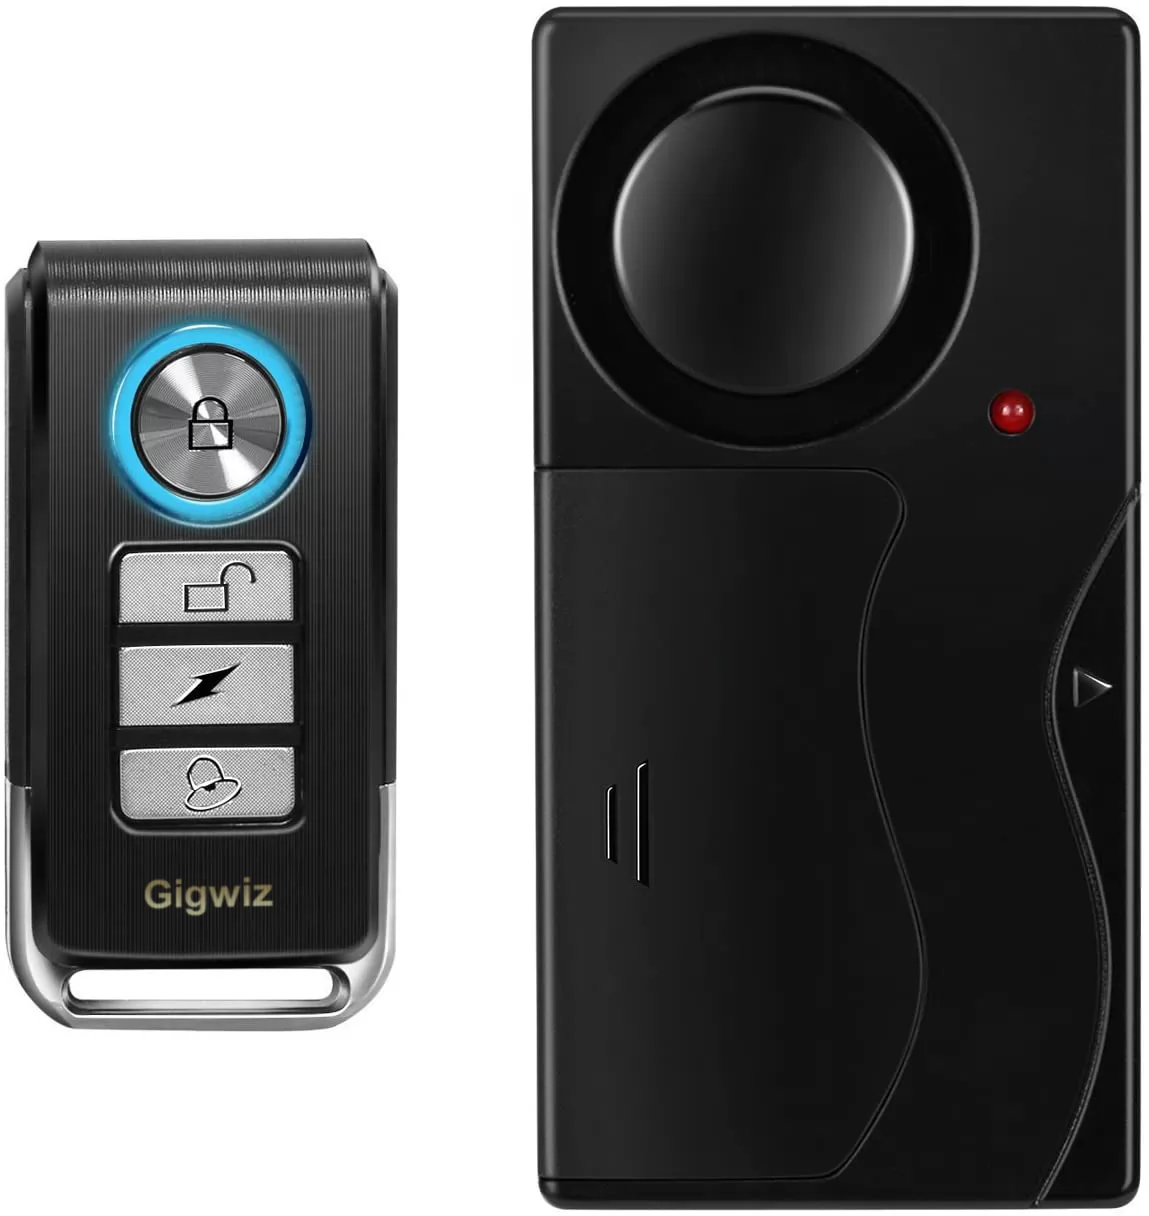 Gigwiz Wireless Vibration Alarm with Remote Control Anti-Theft Alarm Bike/Motorcycle Security Alarm, Security Motion Sensor Alarm,110db Loud